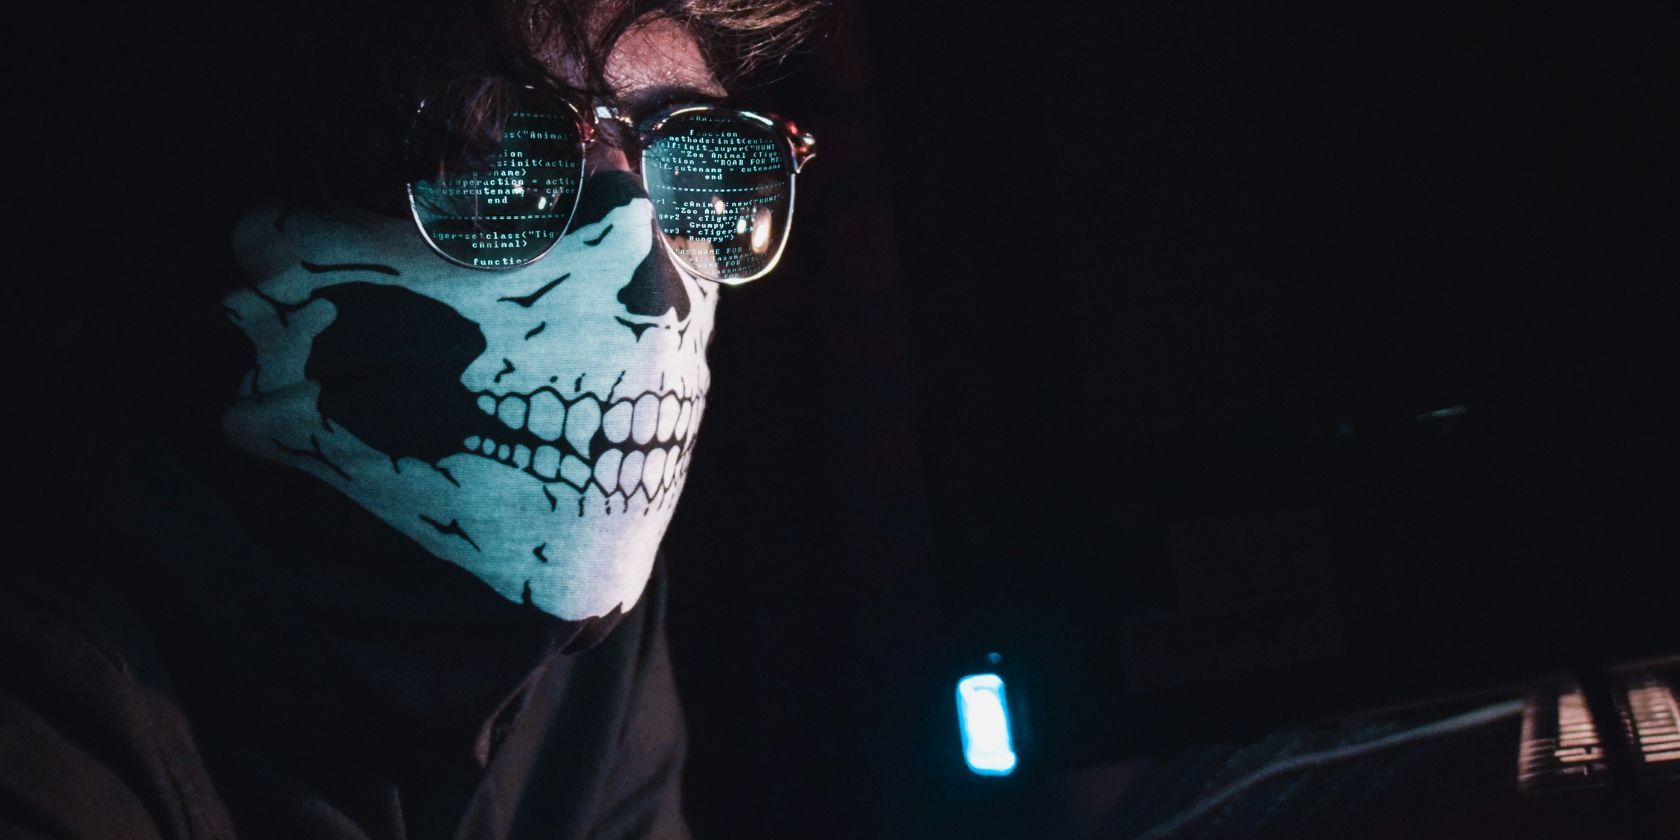 hacker wearing sunglasses and skull mask at computer desk